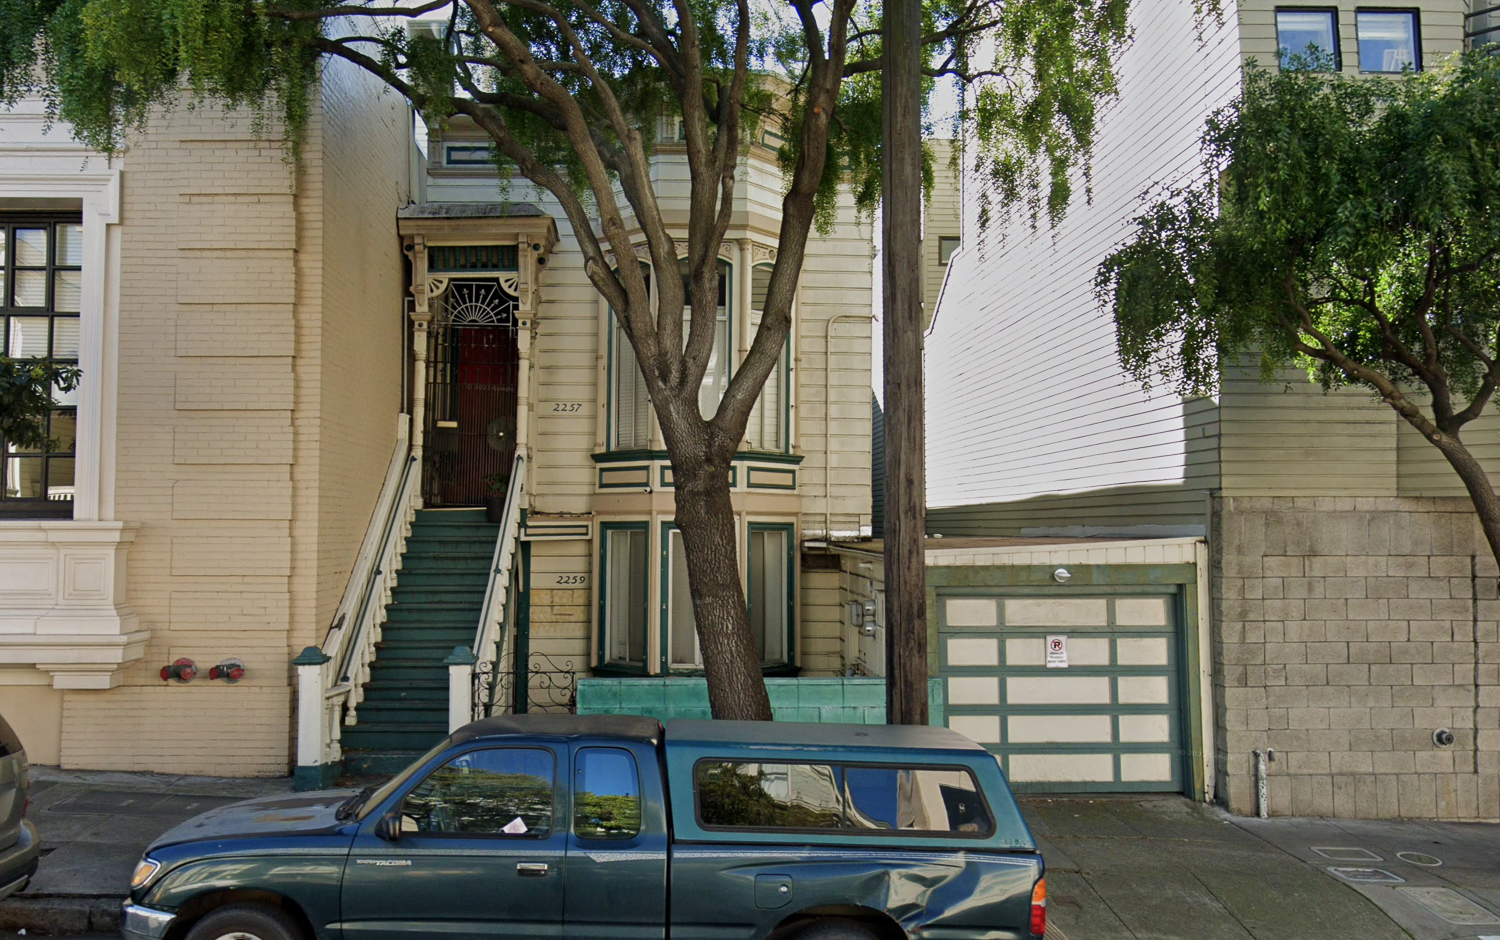 2257-2259 Bush Street, image via Google Street View